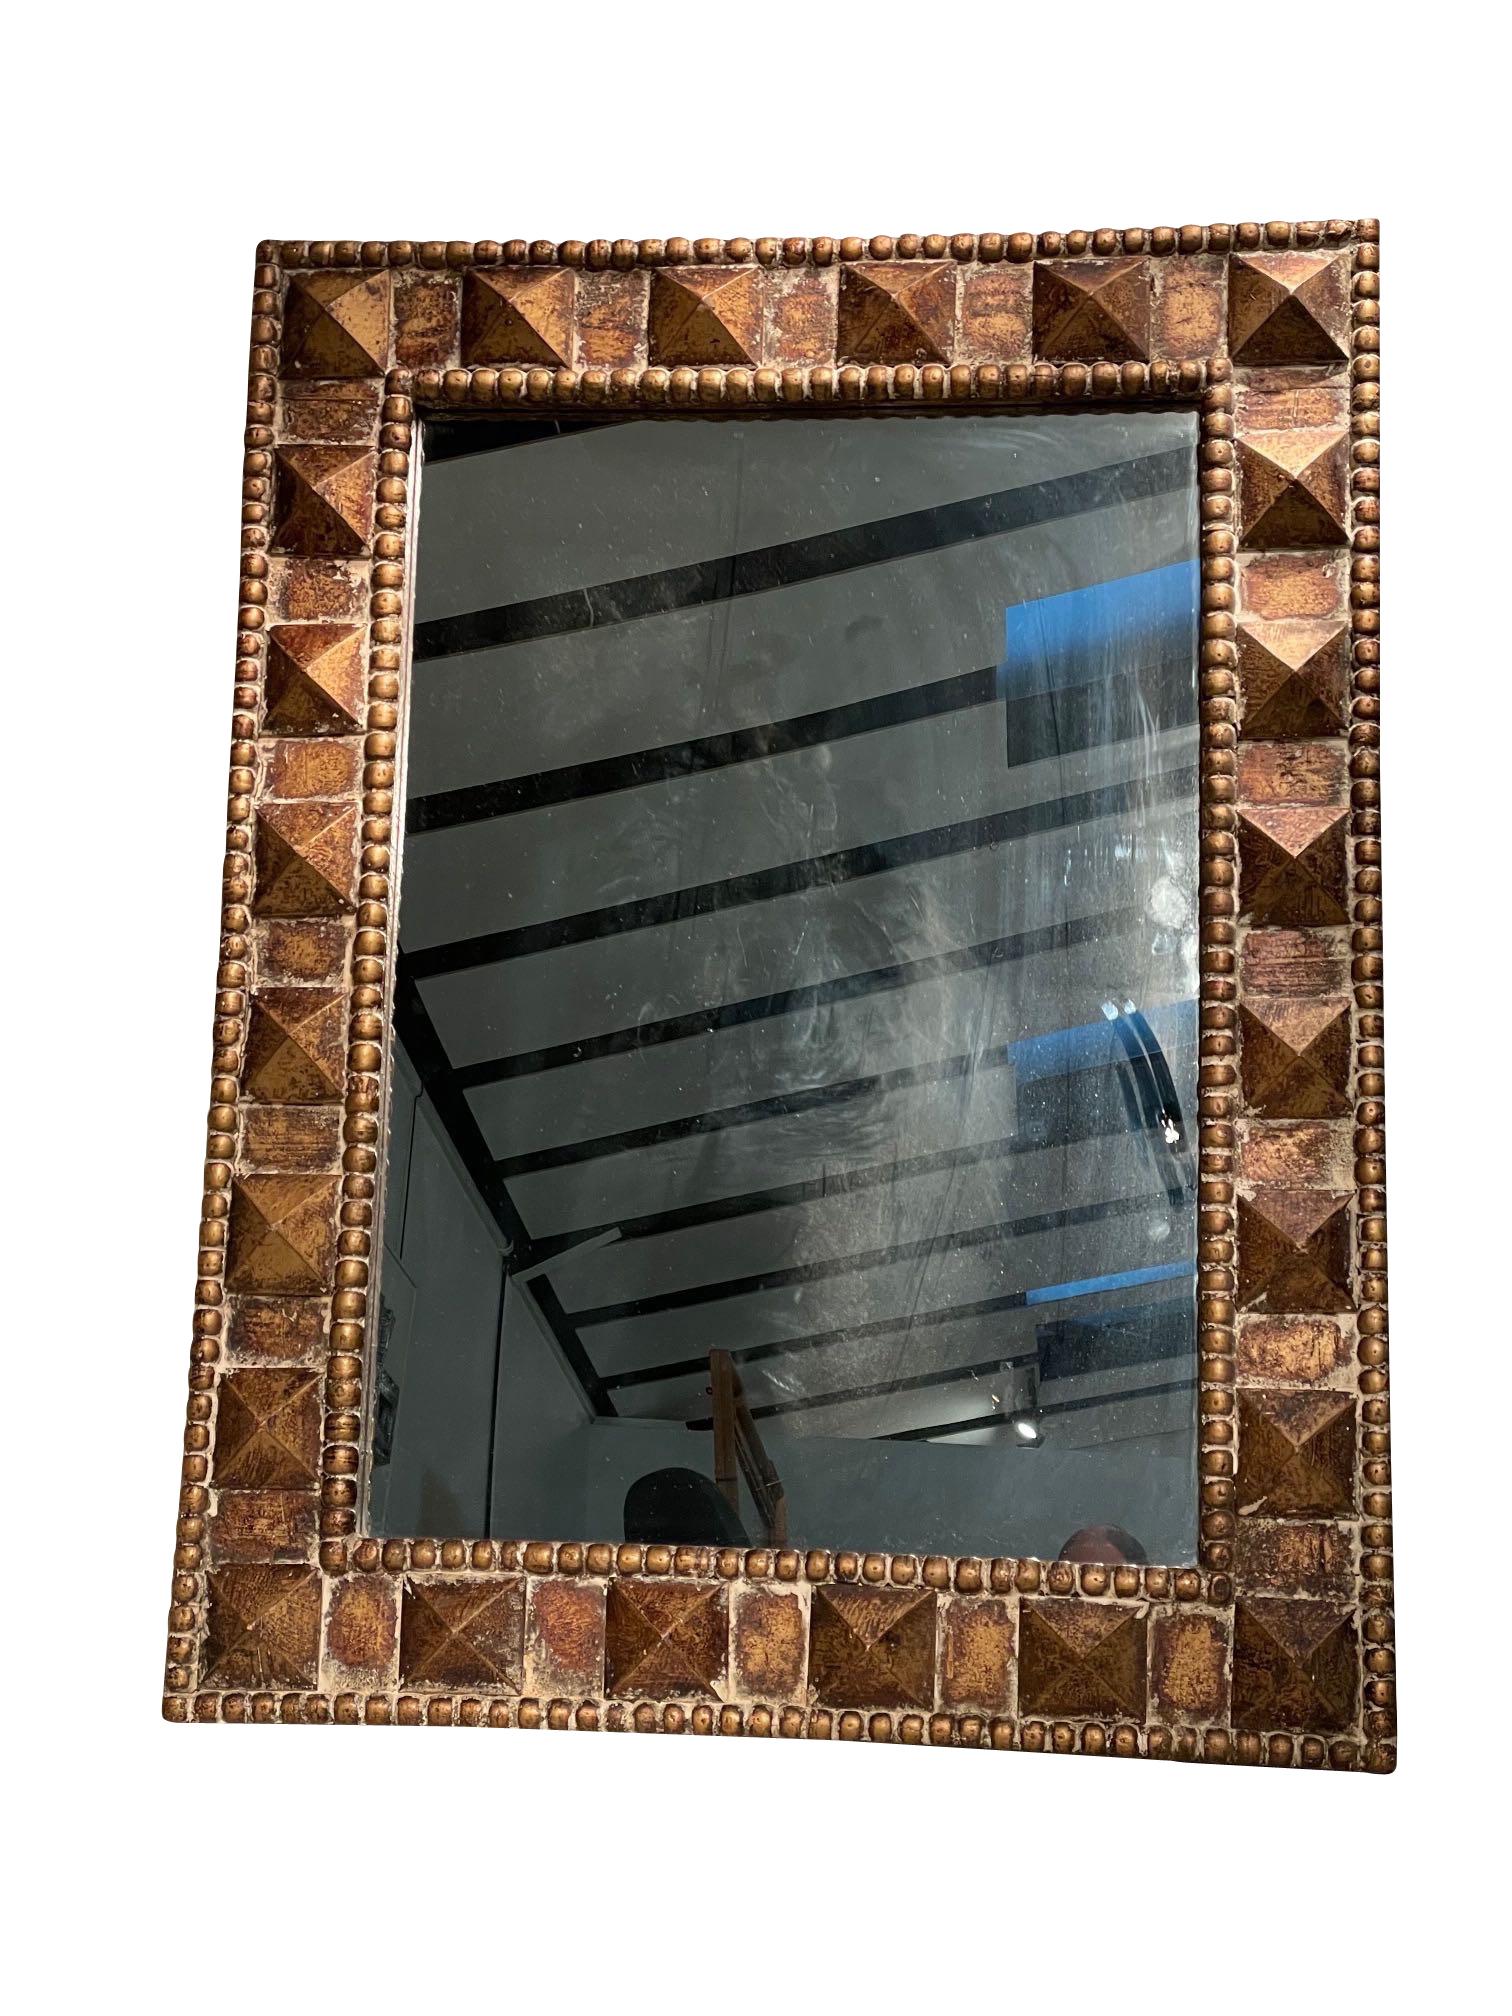 1940's French gilt wood frame mirror with decorative raised pyramid design.
Beaded border design.
Beautiful natural patina.
Original mirror.
